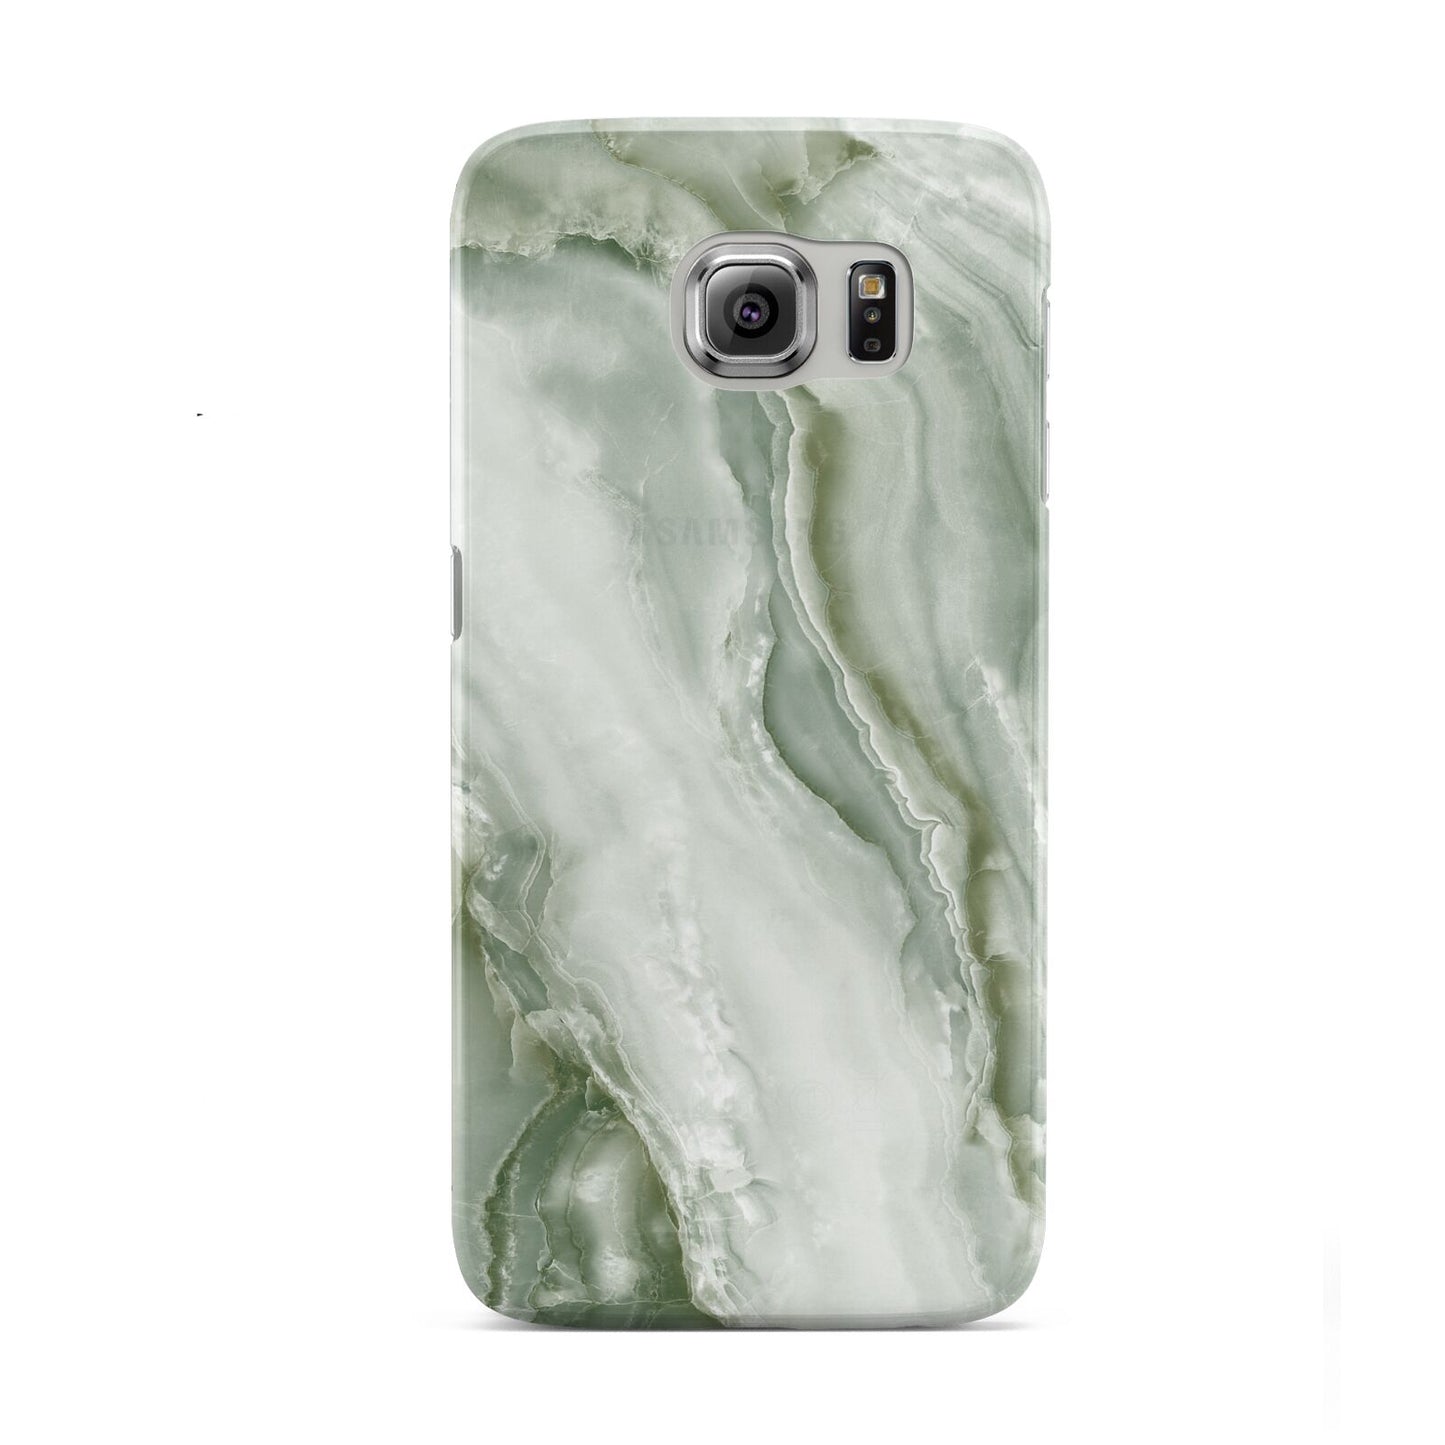 Pistachio Green Marble Samsung Galaxy S6 Case